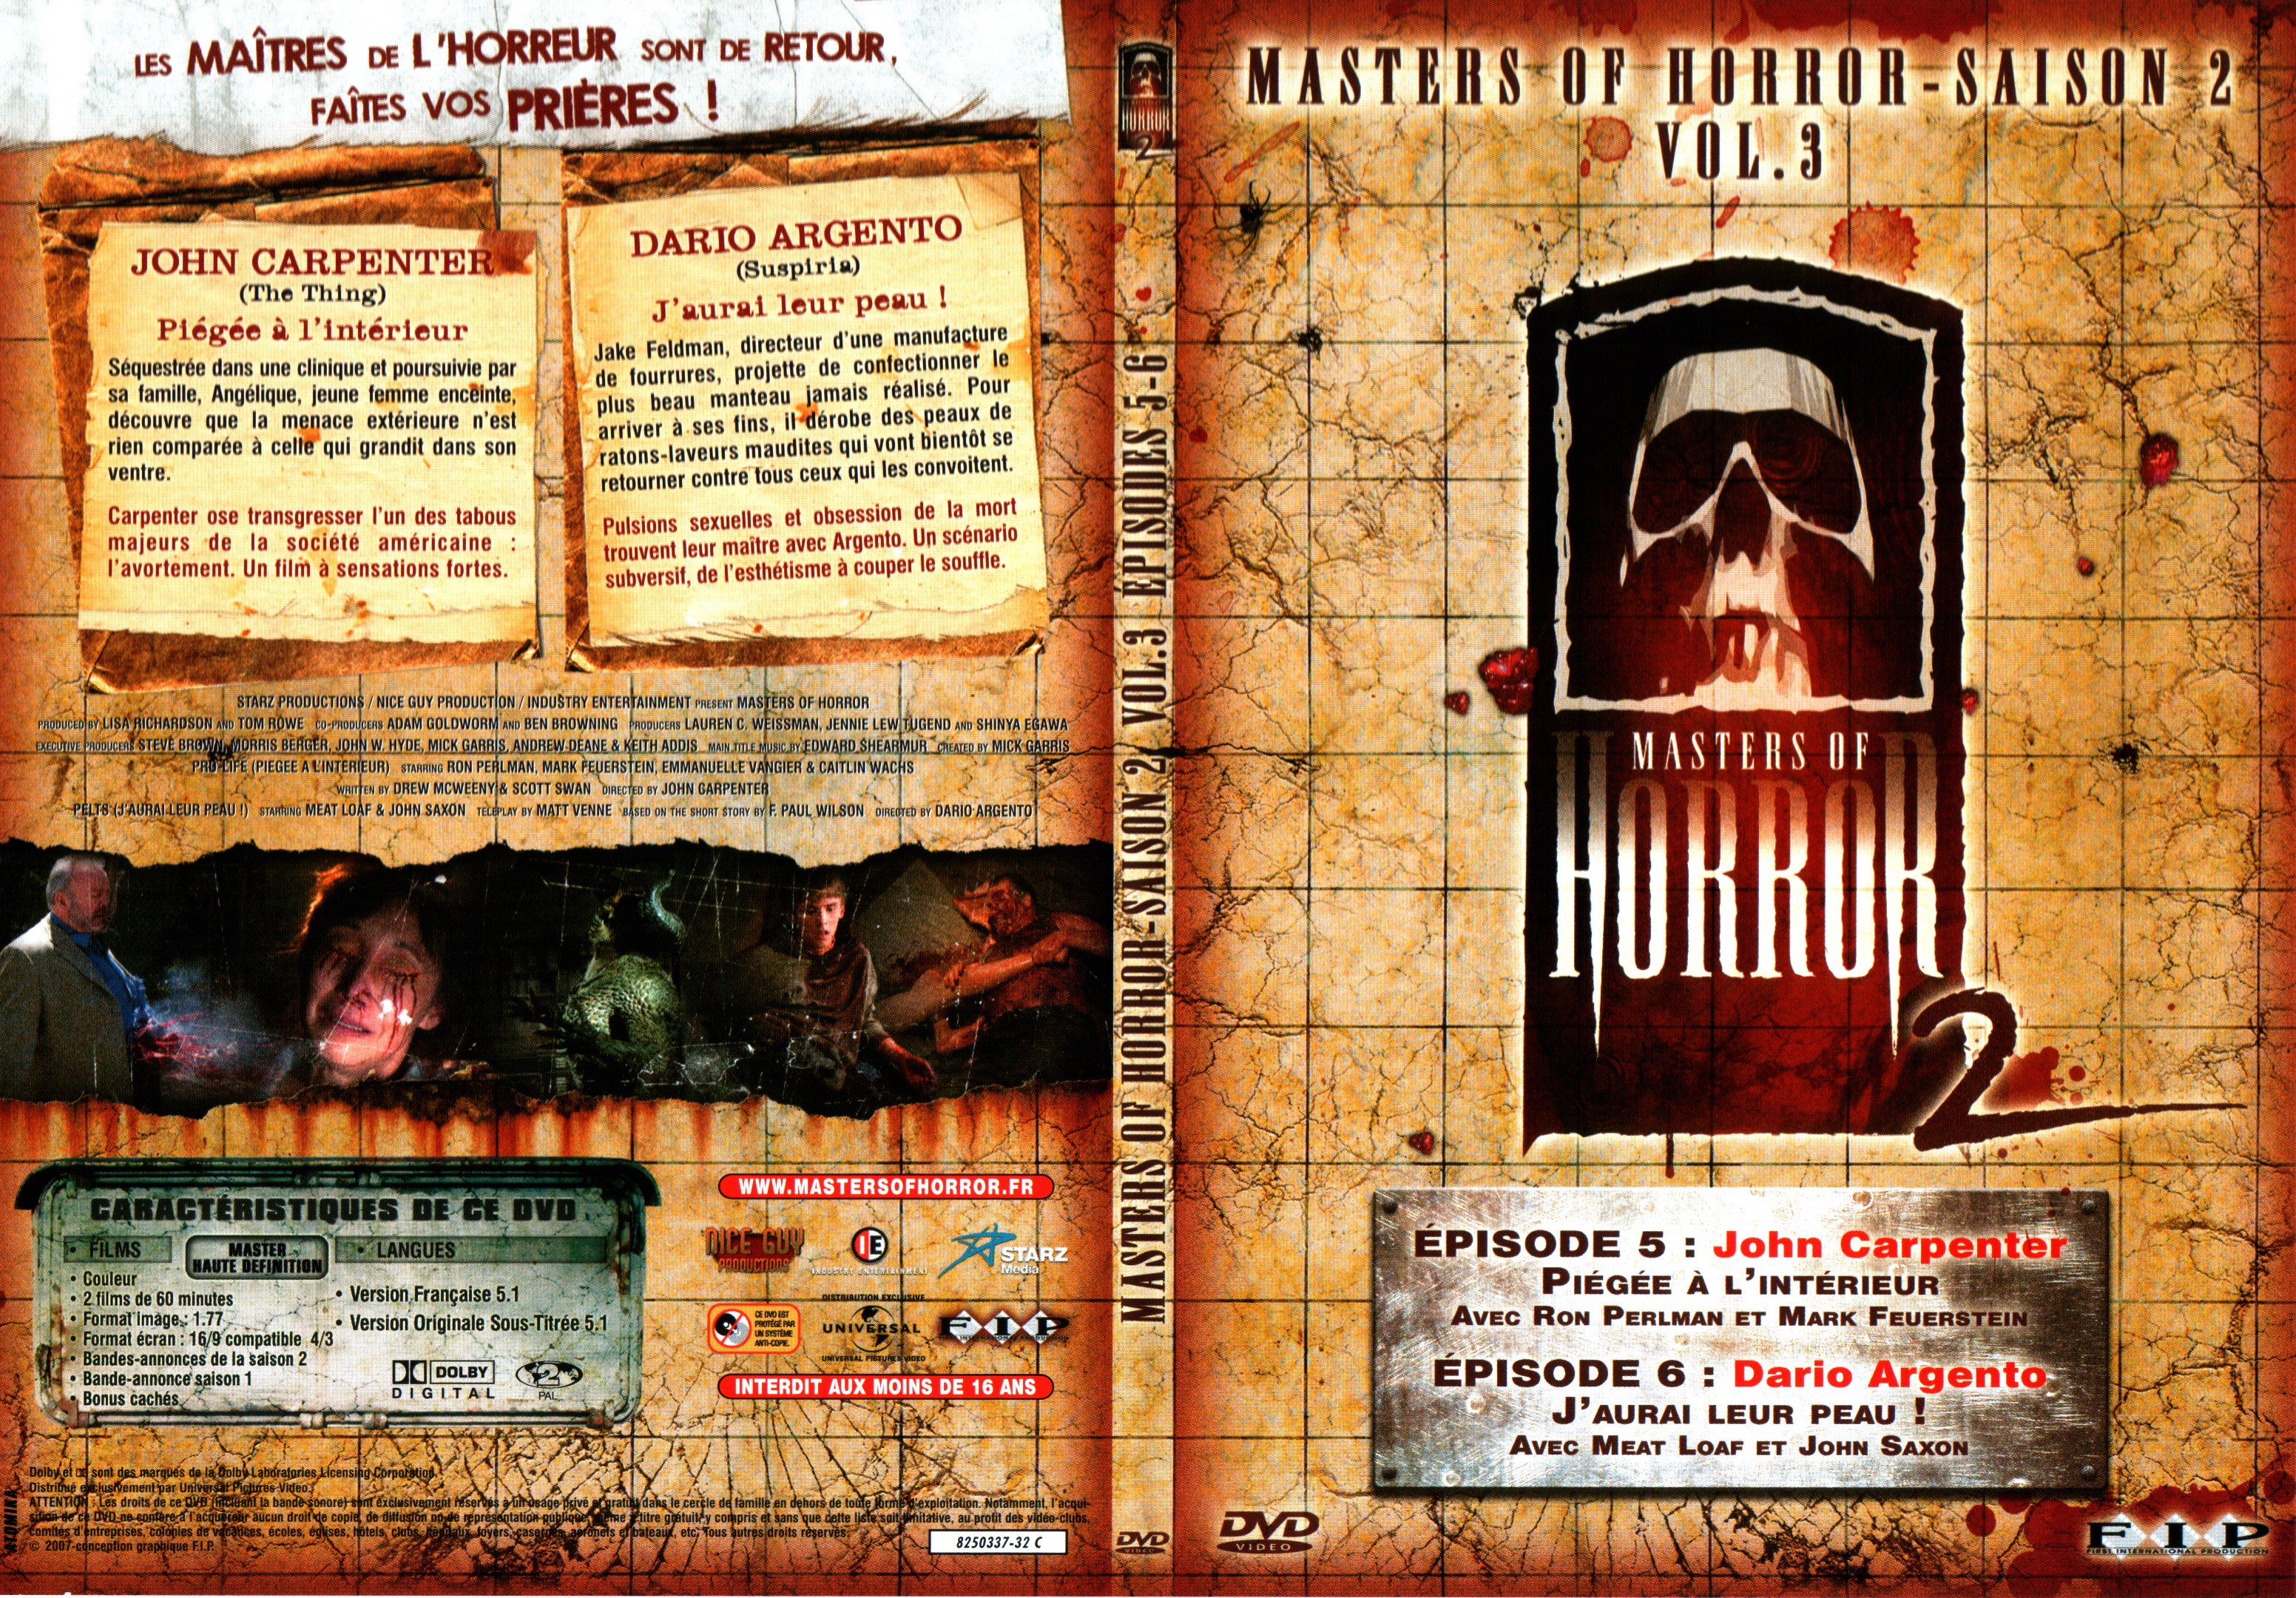 Jaquette DVD Masters of horror Saison 2 vol 3